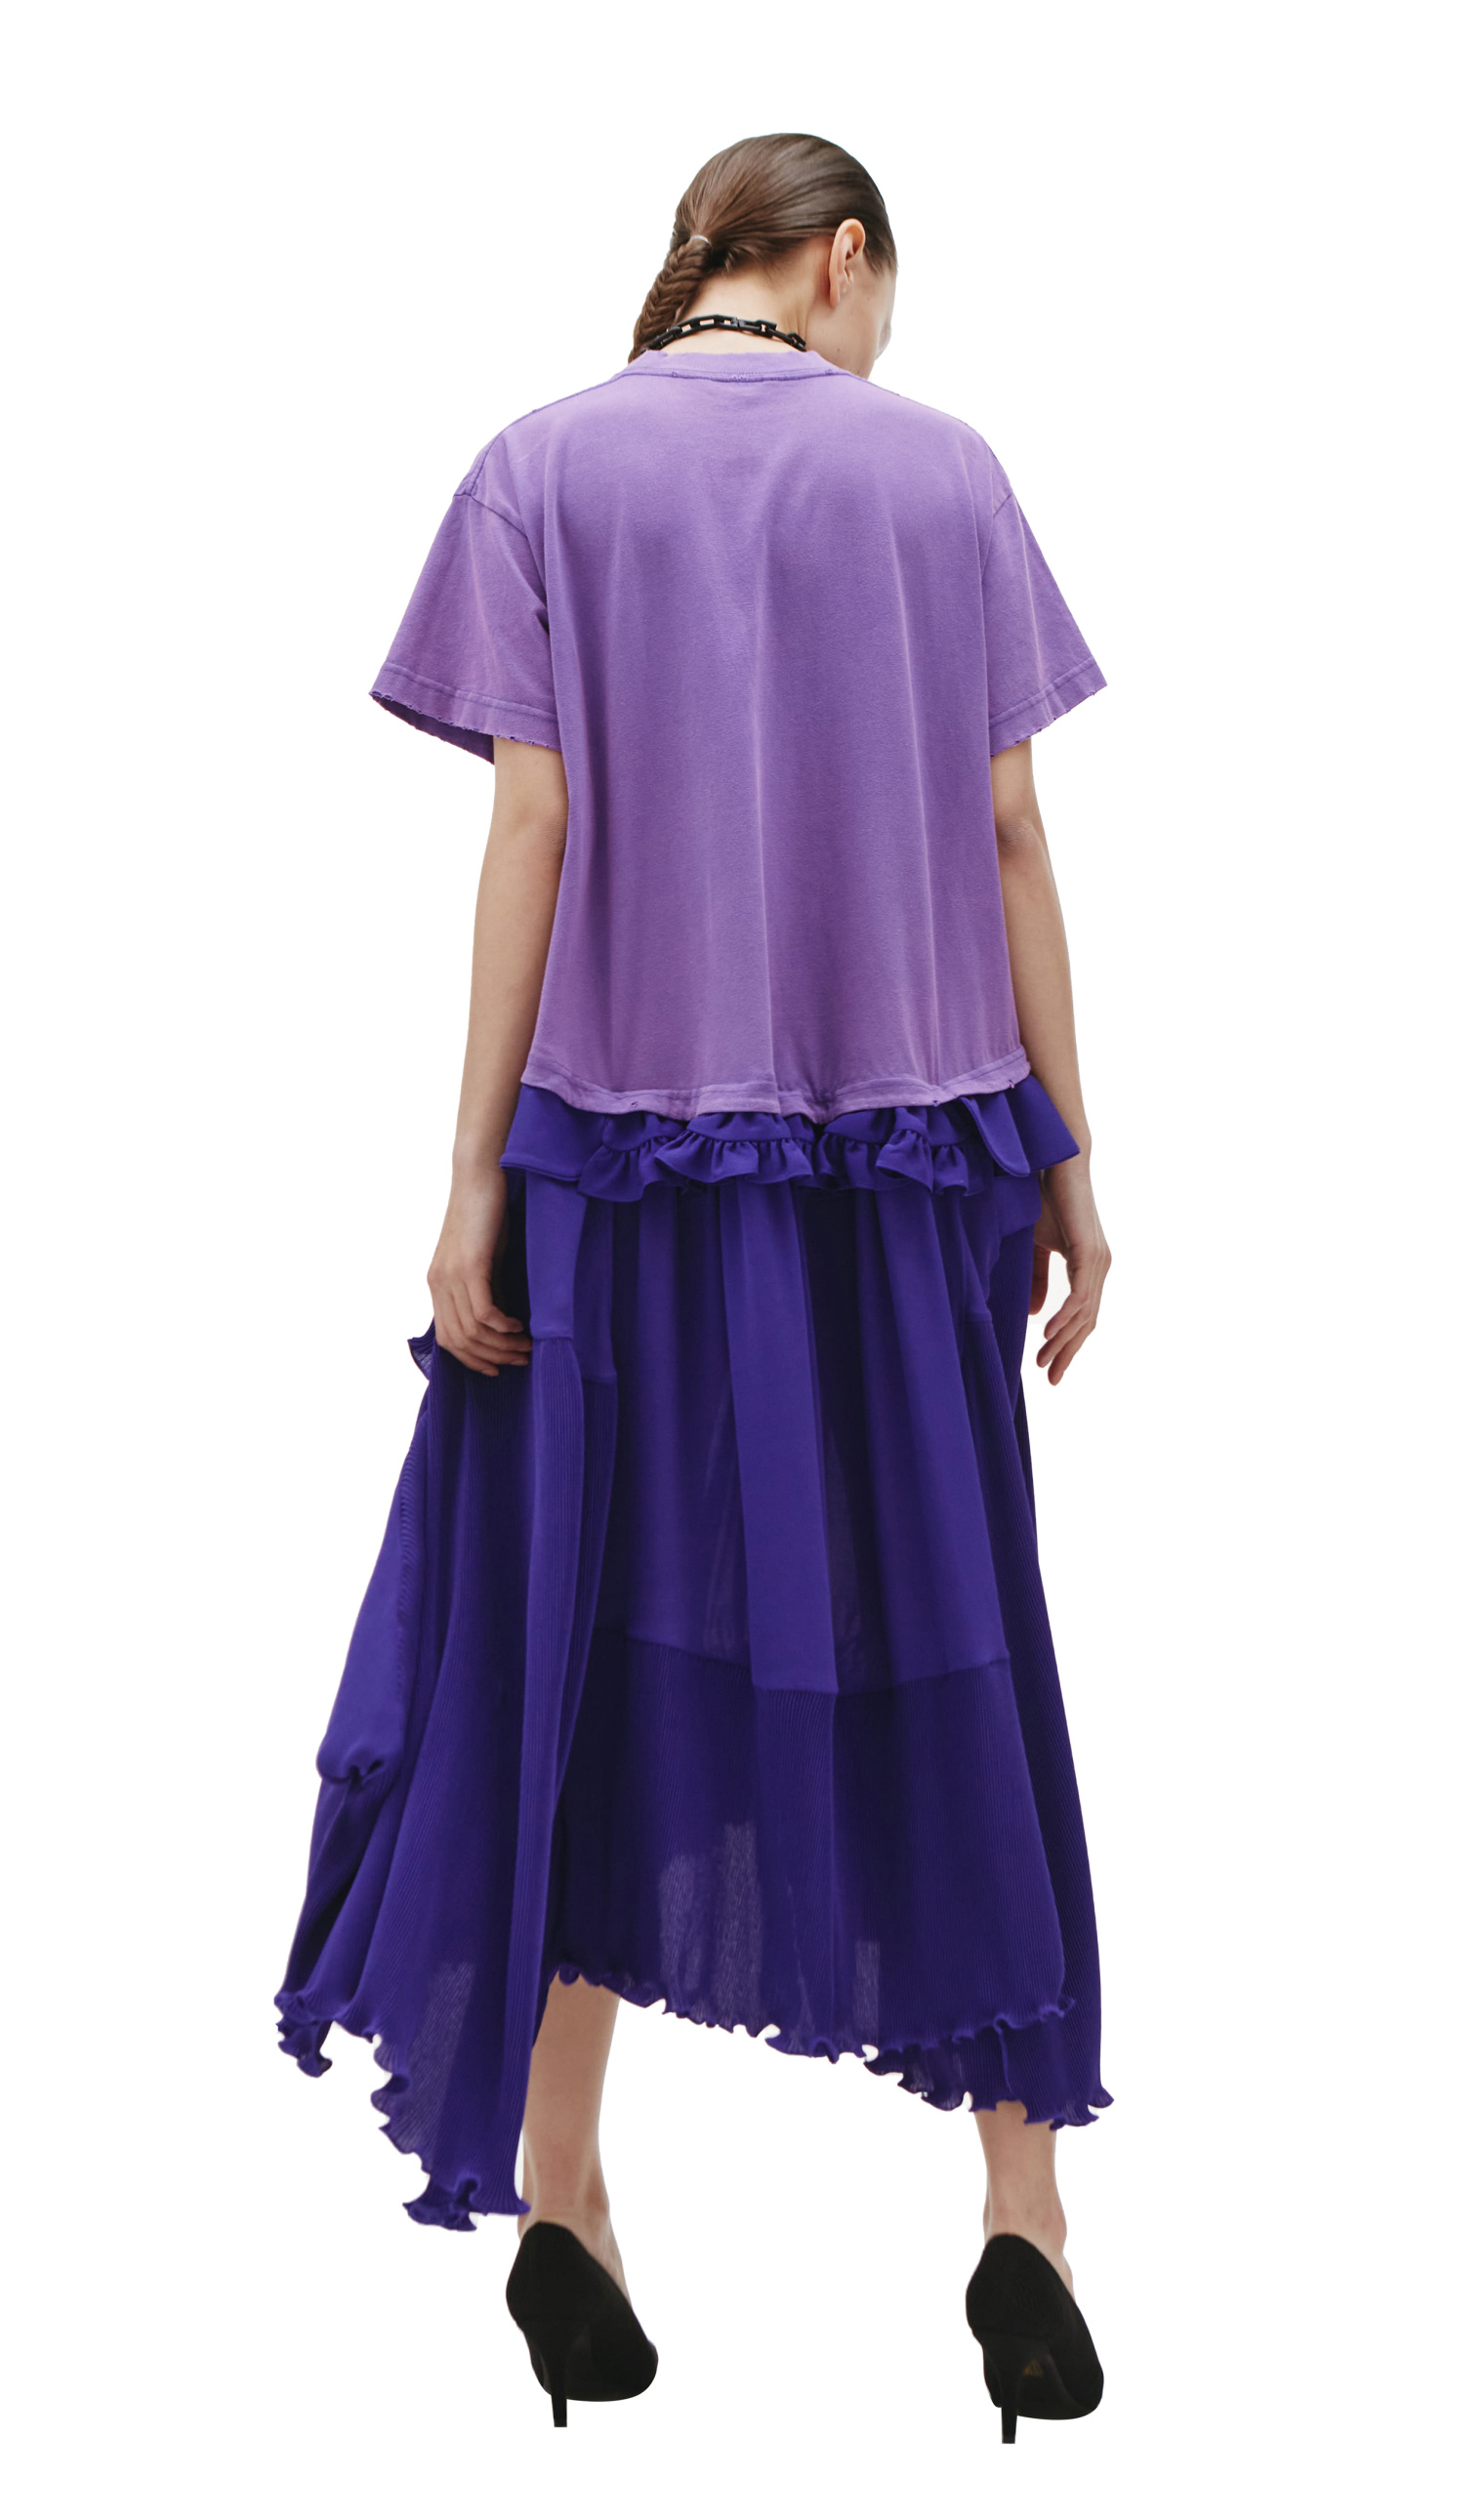 Balenciaga Sporty B T-Shirt Dress in purple